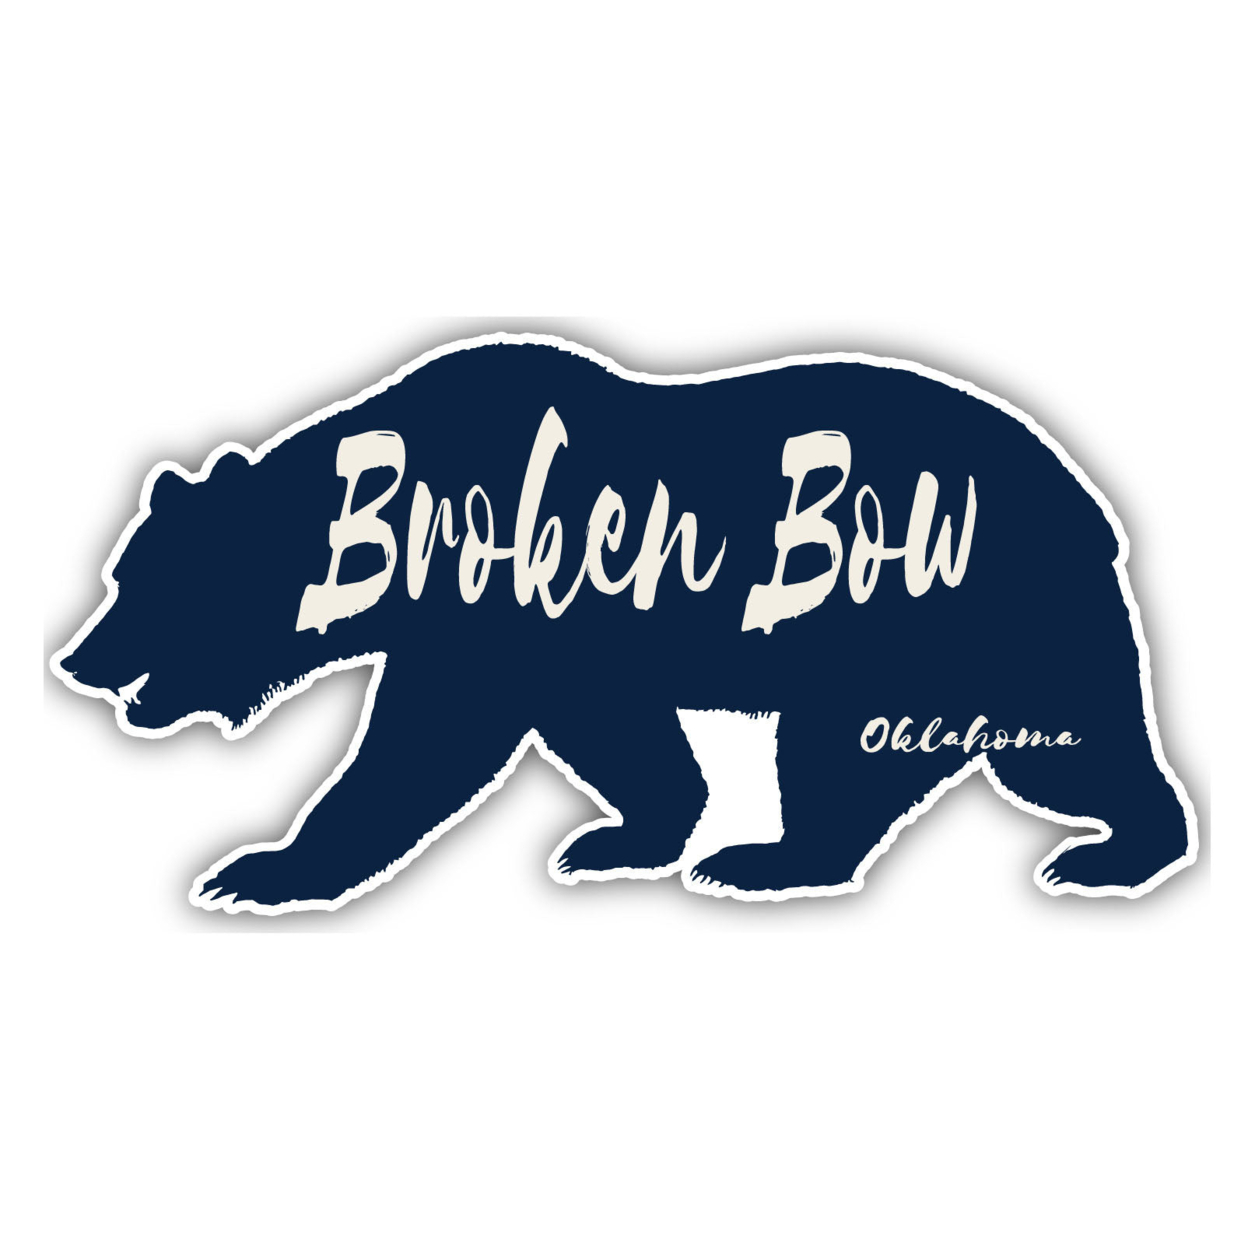 Broken Bow Oklahoma Souvenir Decorative Stickers (Choose Theme And Size) - Single Unit, 10-Inch, Bear